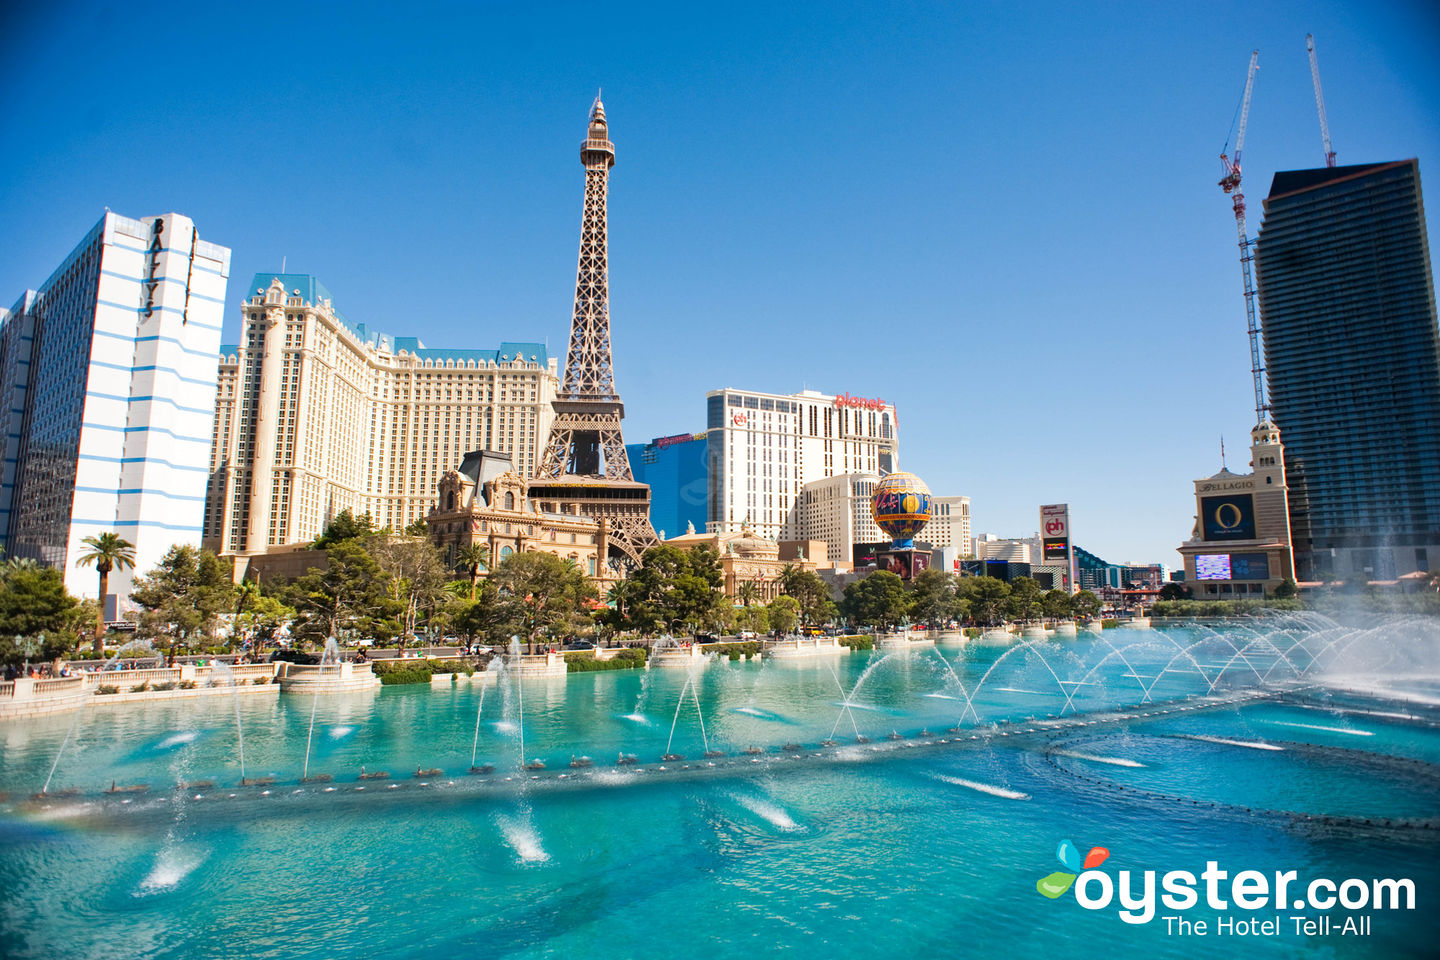 Paris Las Vegas Pool: 16 Answers You Should Know - FeelingVegas